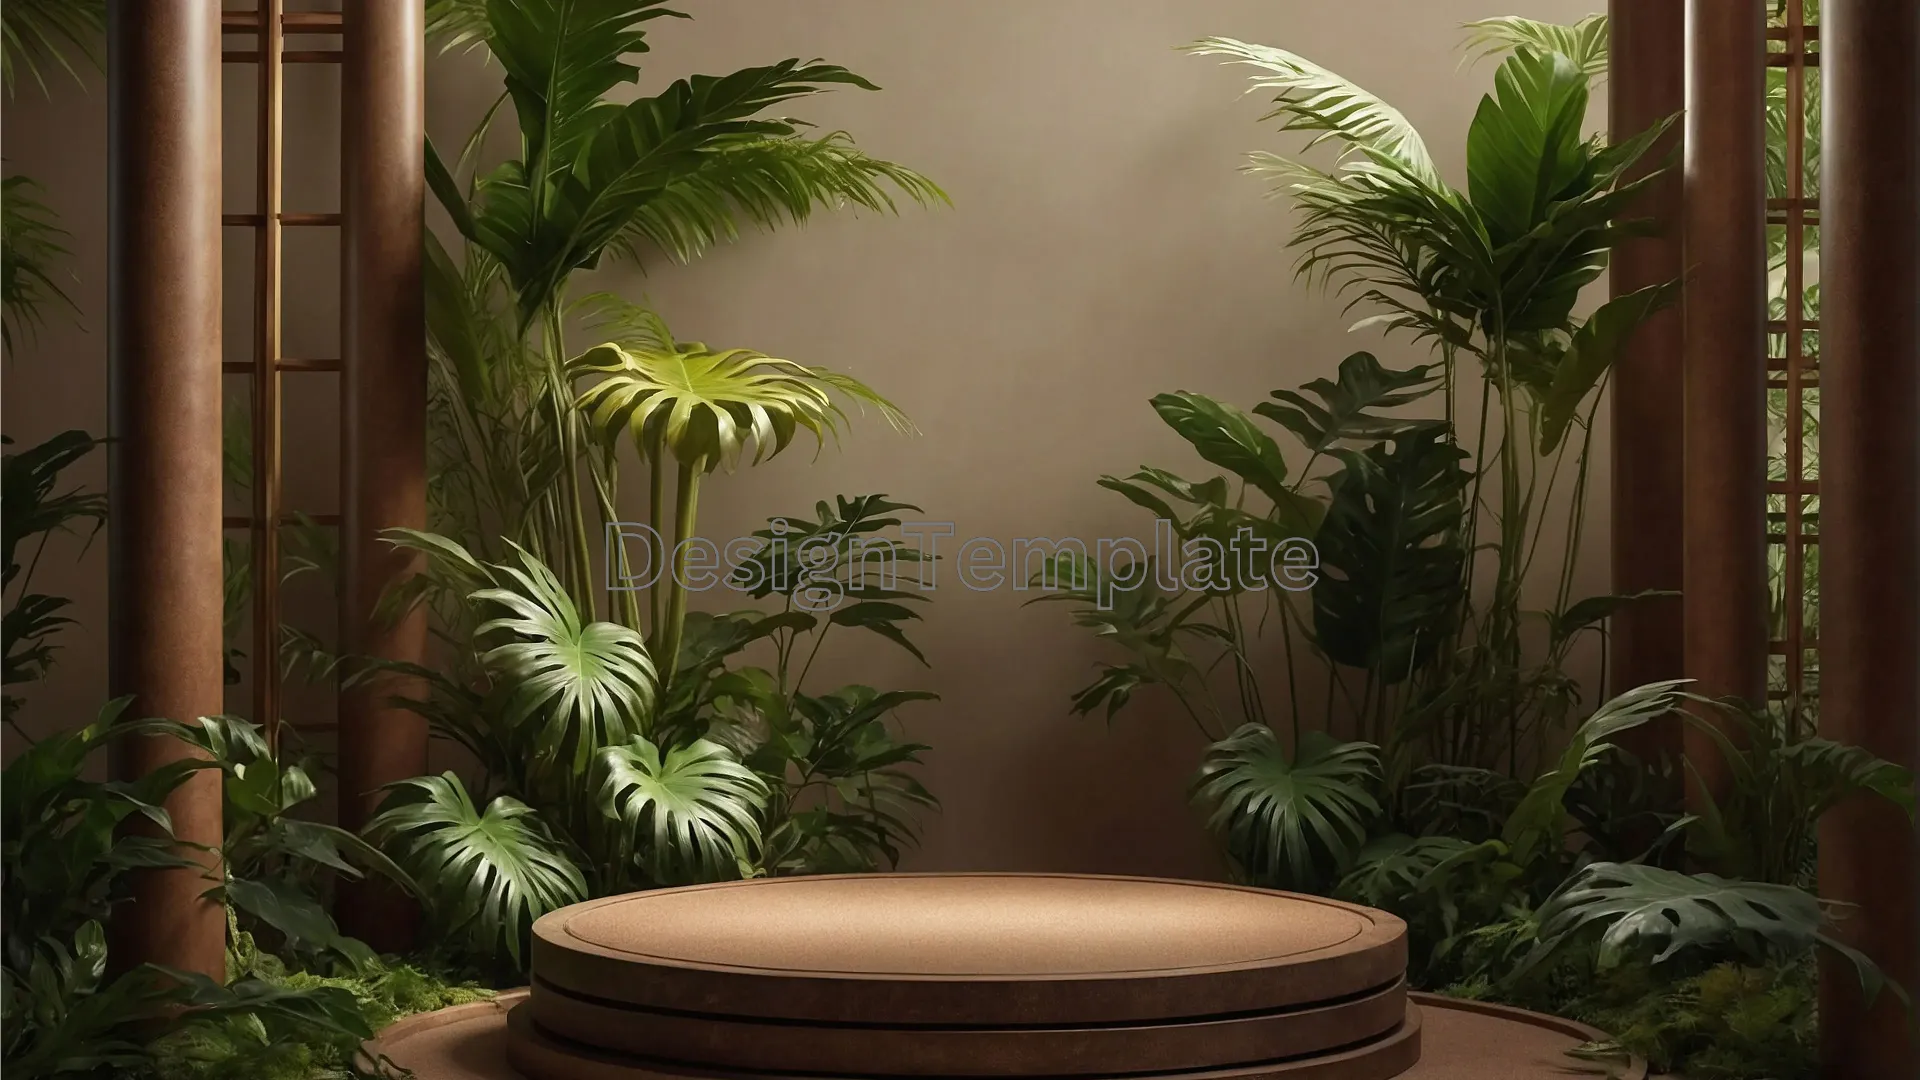 Eco-Chic Circular Platform Tropical Garden Image image